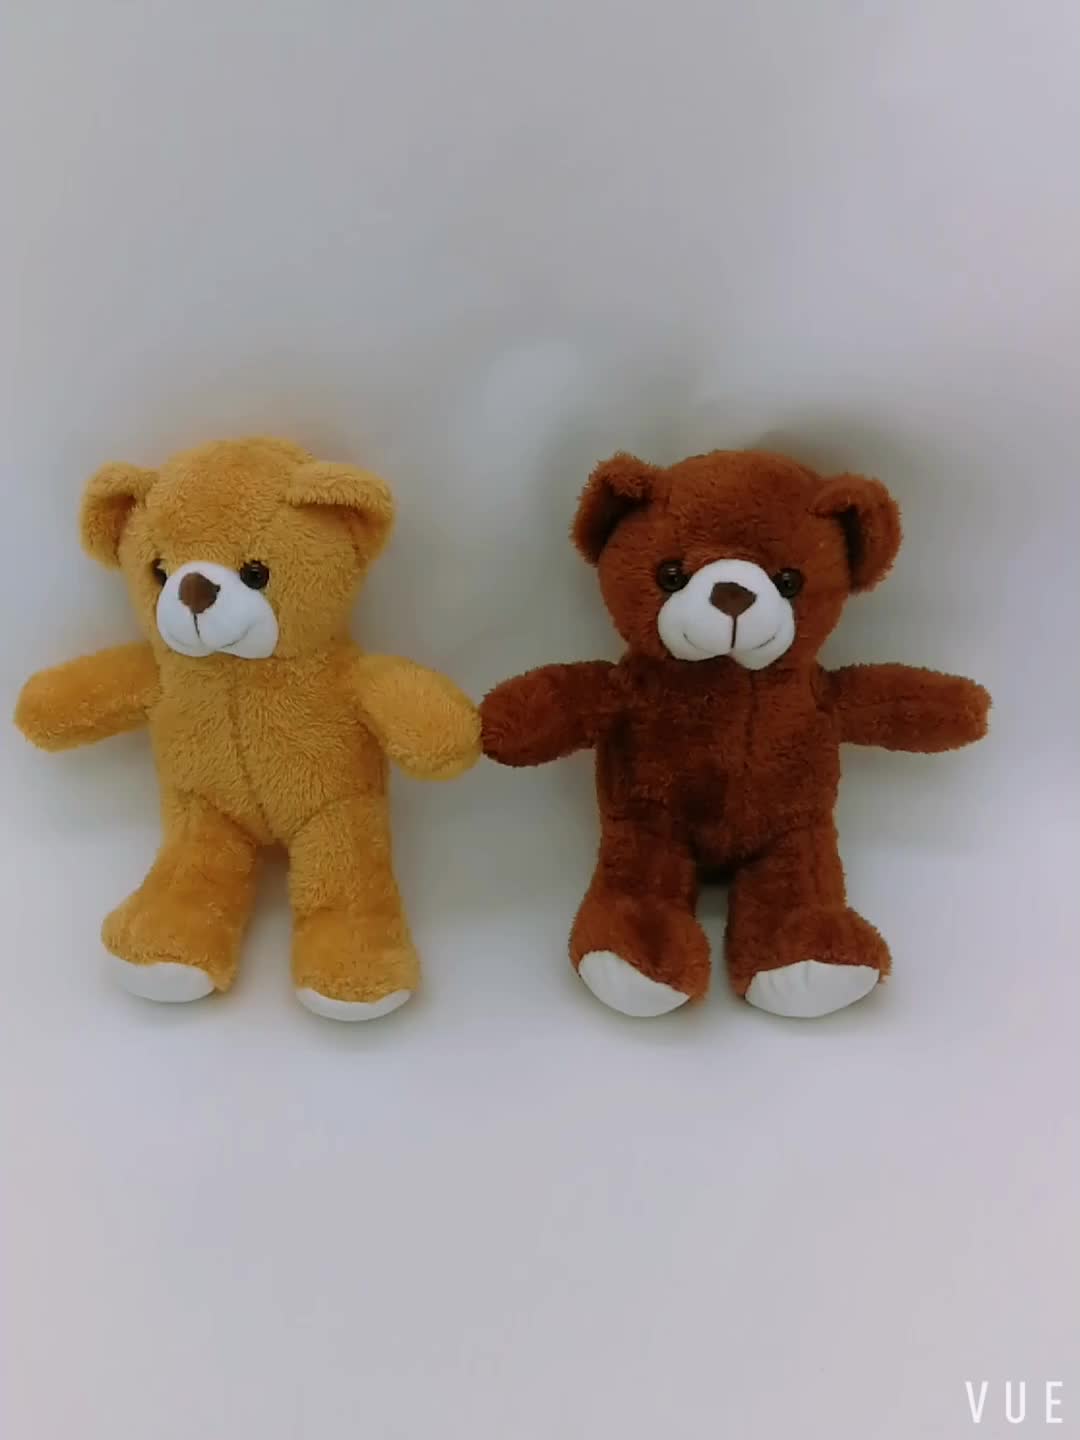 Plush Toys Giant Teddy Bear With Clothes - Buy Plush Toys,Giant Teddy ...